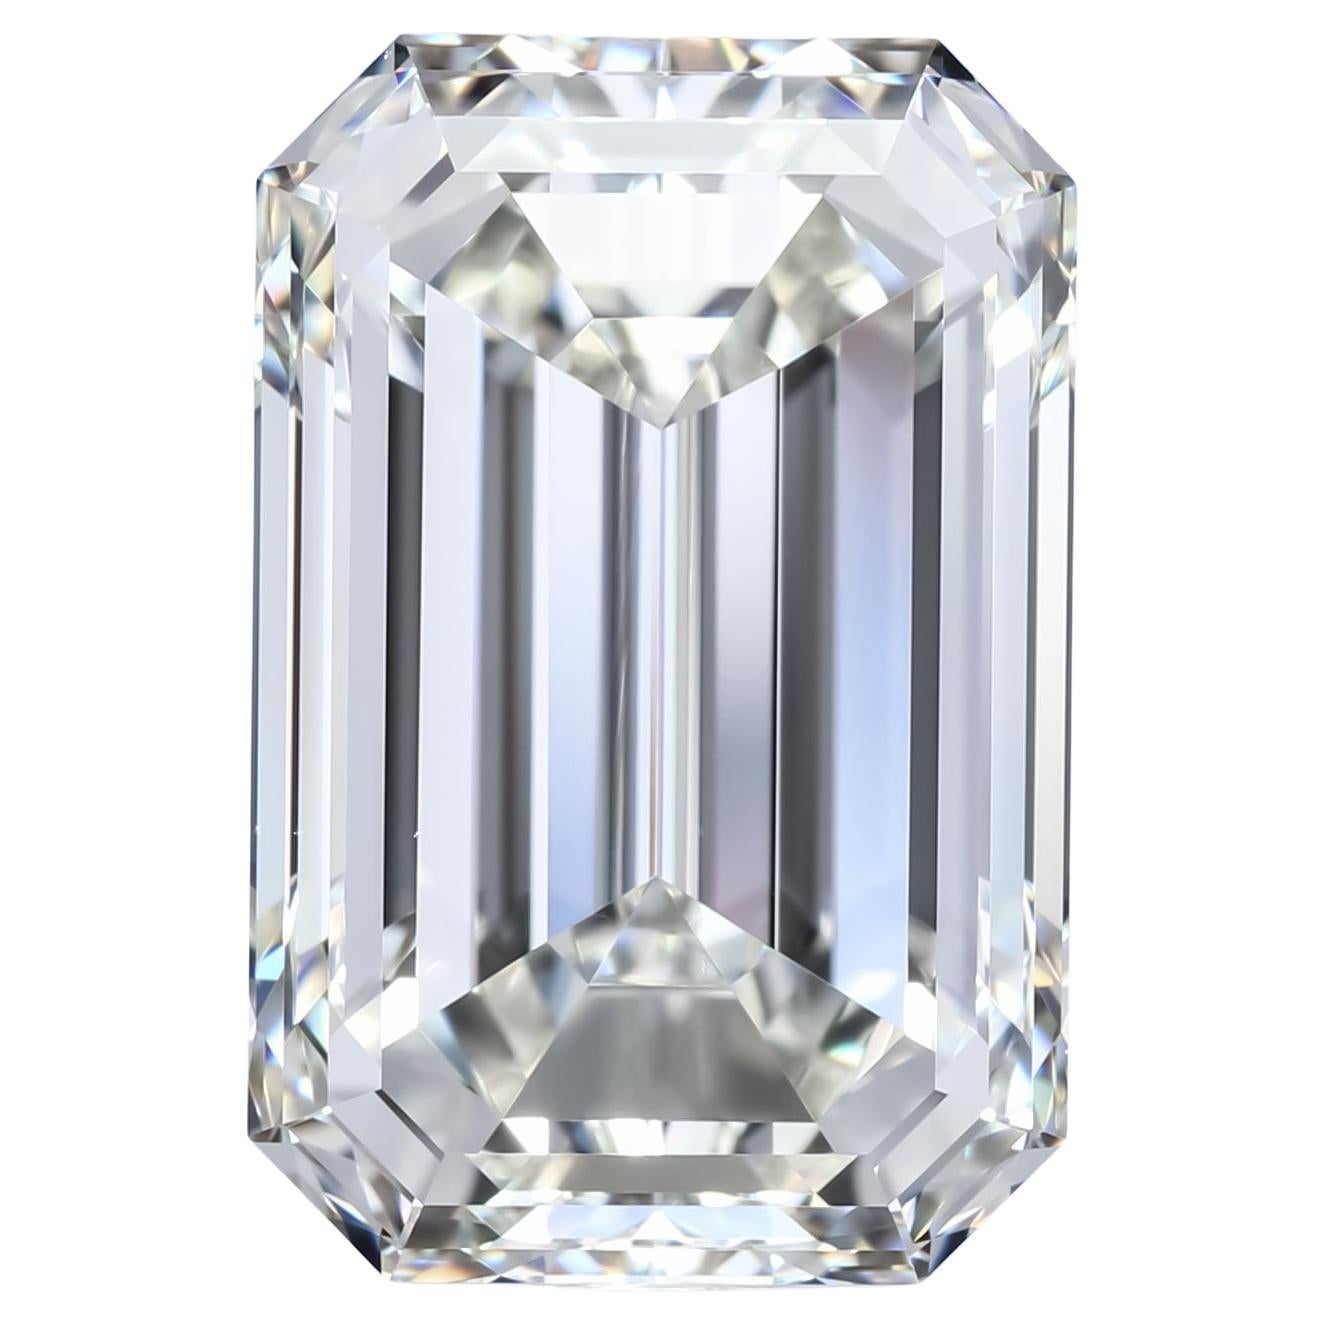 Alexander GIA Certified 9.15 Carat J VVS2 Emerald Cut Diamond